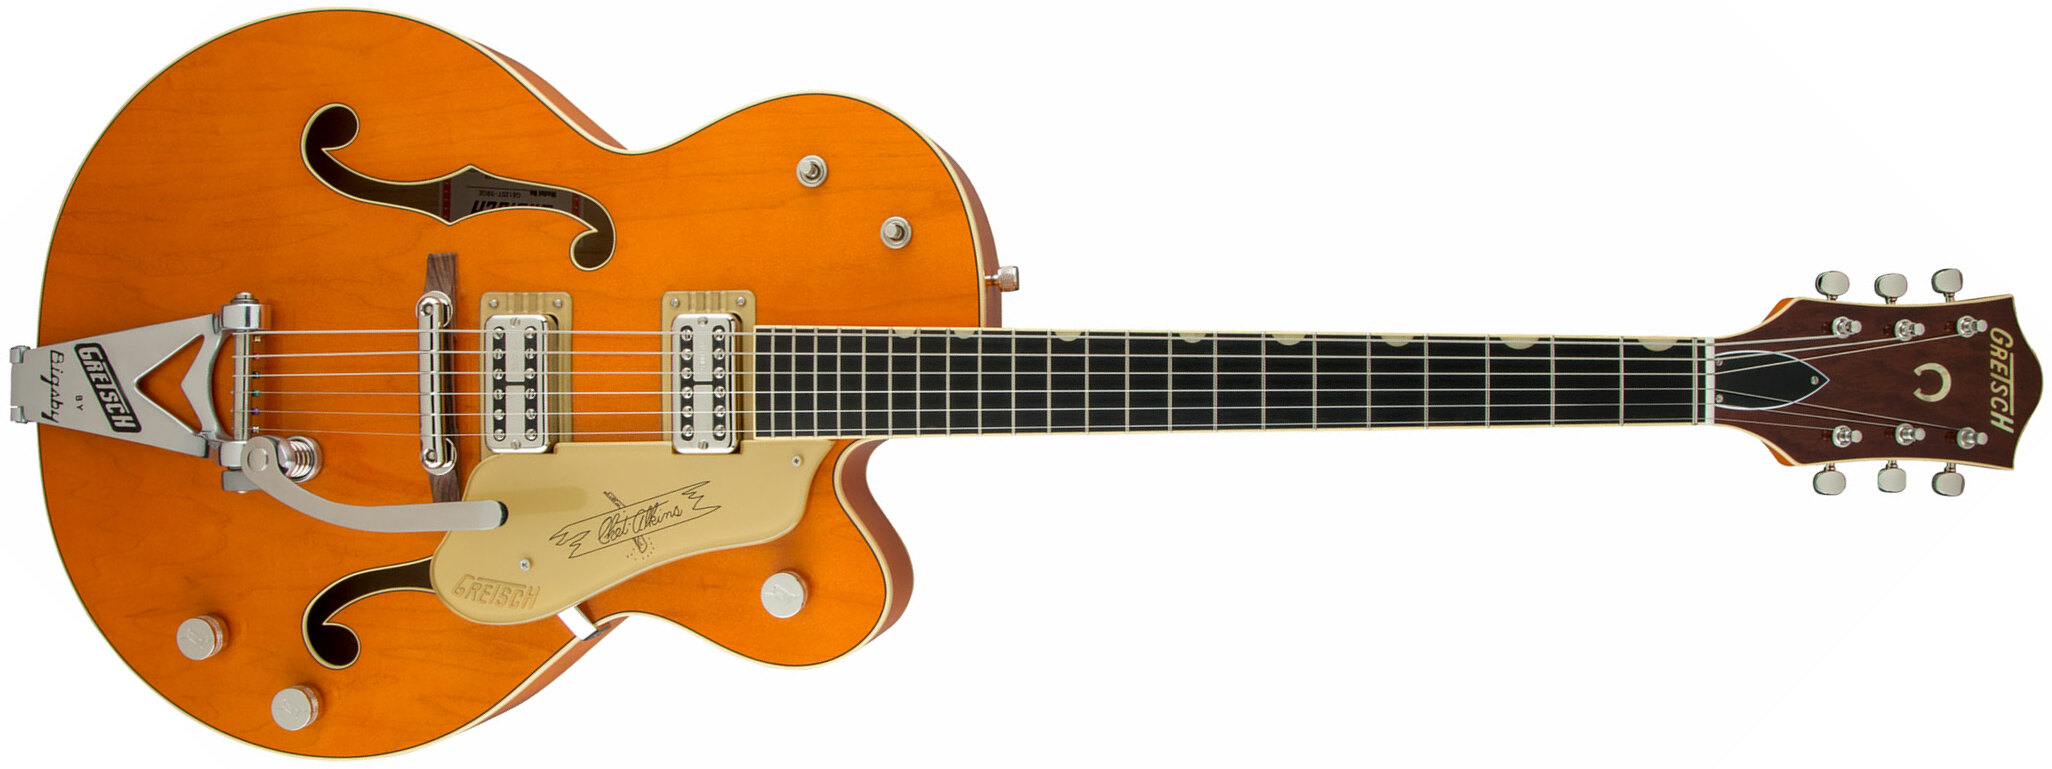 Gretsch Chet Atkins G6120t-59 Vintage Select 1959 Bigsby Pro Jap 2h Tv Jones Trem Eb - Vintage Orange Stain - Hollow bodytock elektrische gitaar - Mai